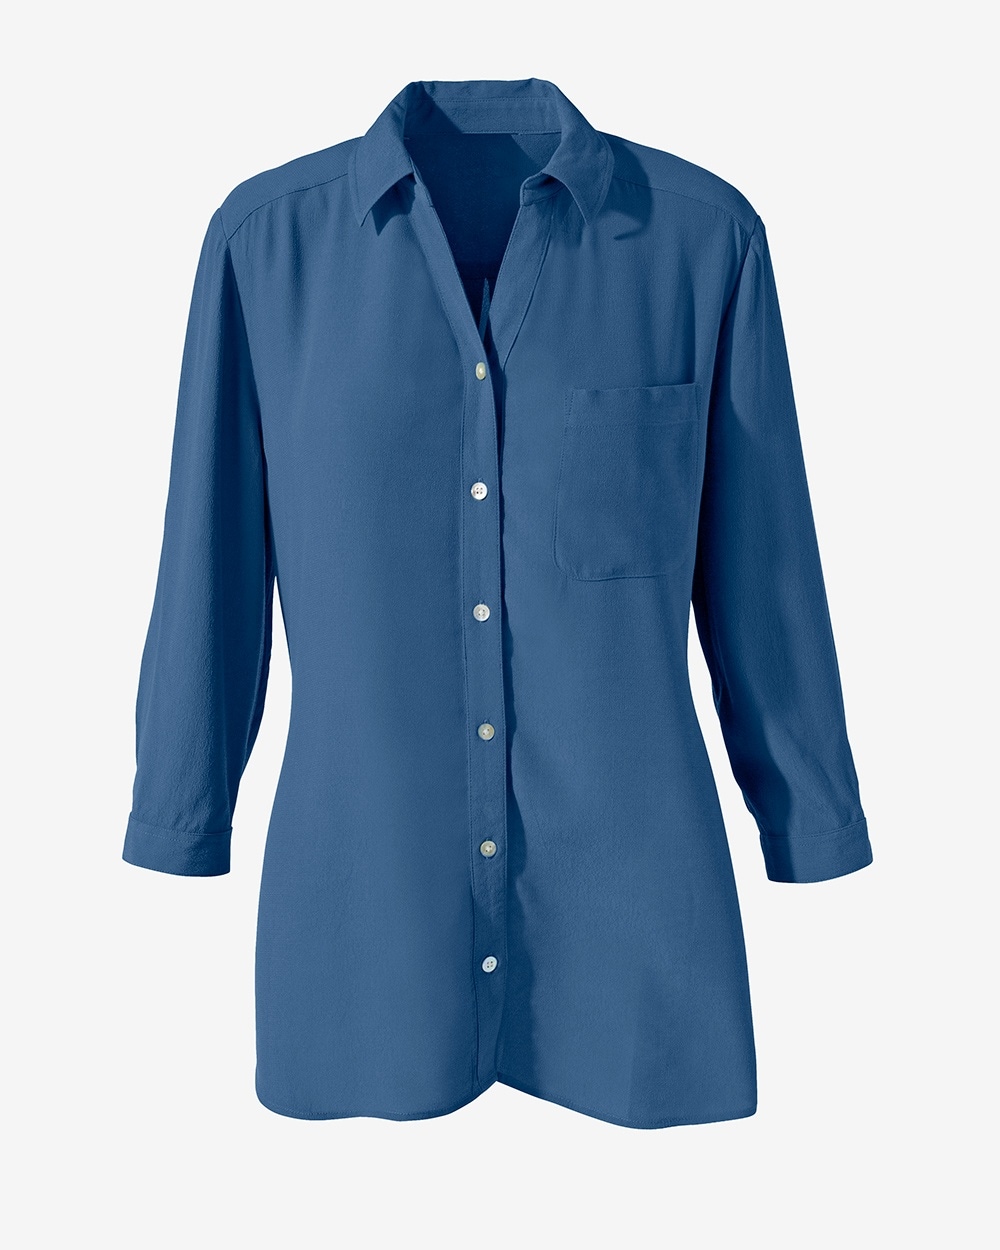 Crepe Texture Modern Utility Button-Down Shirt